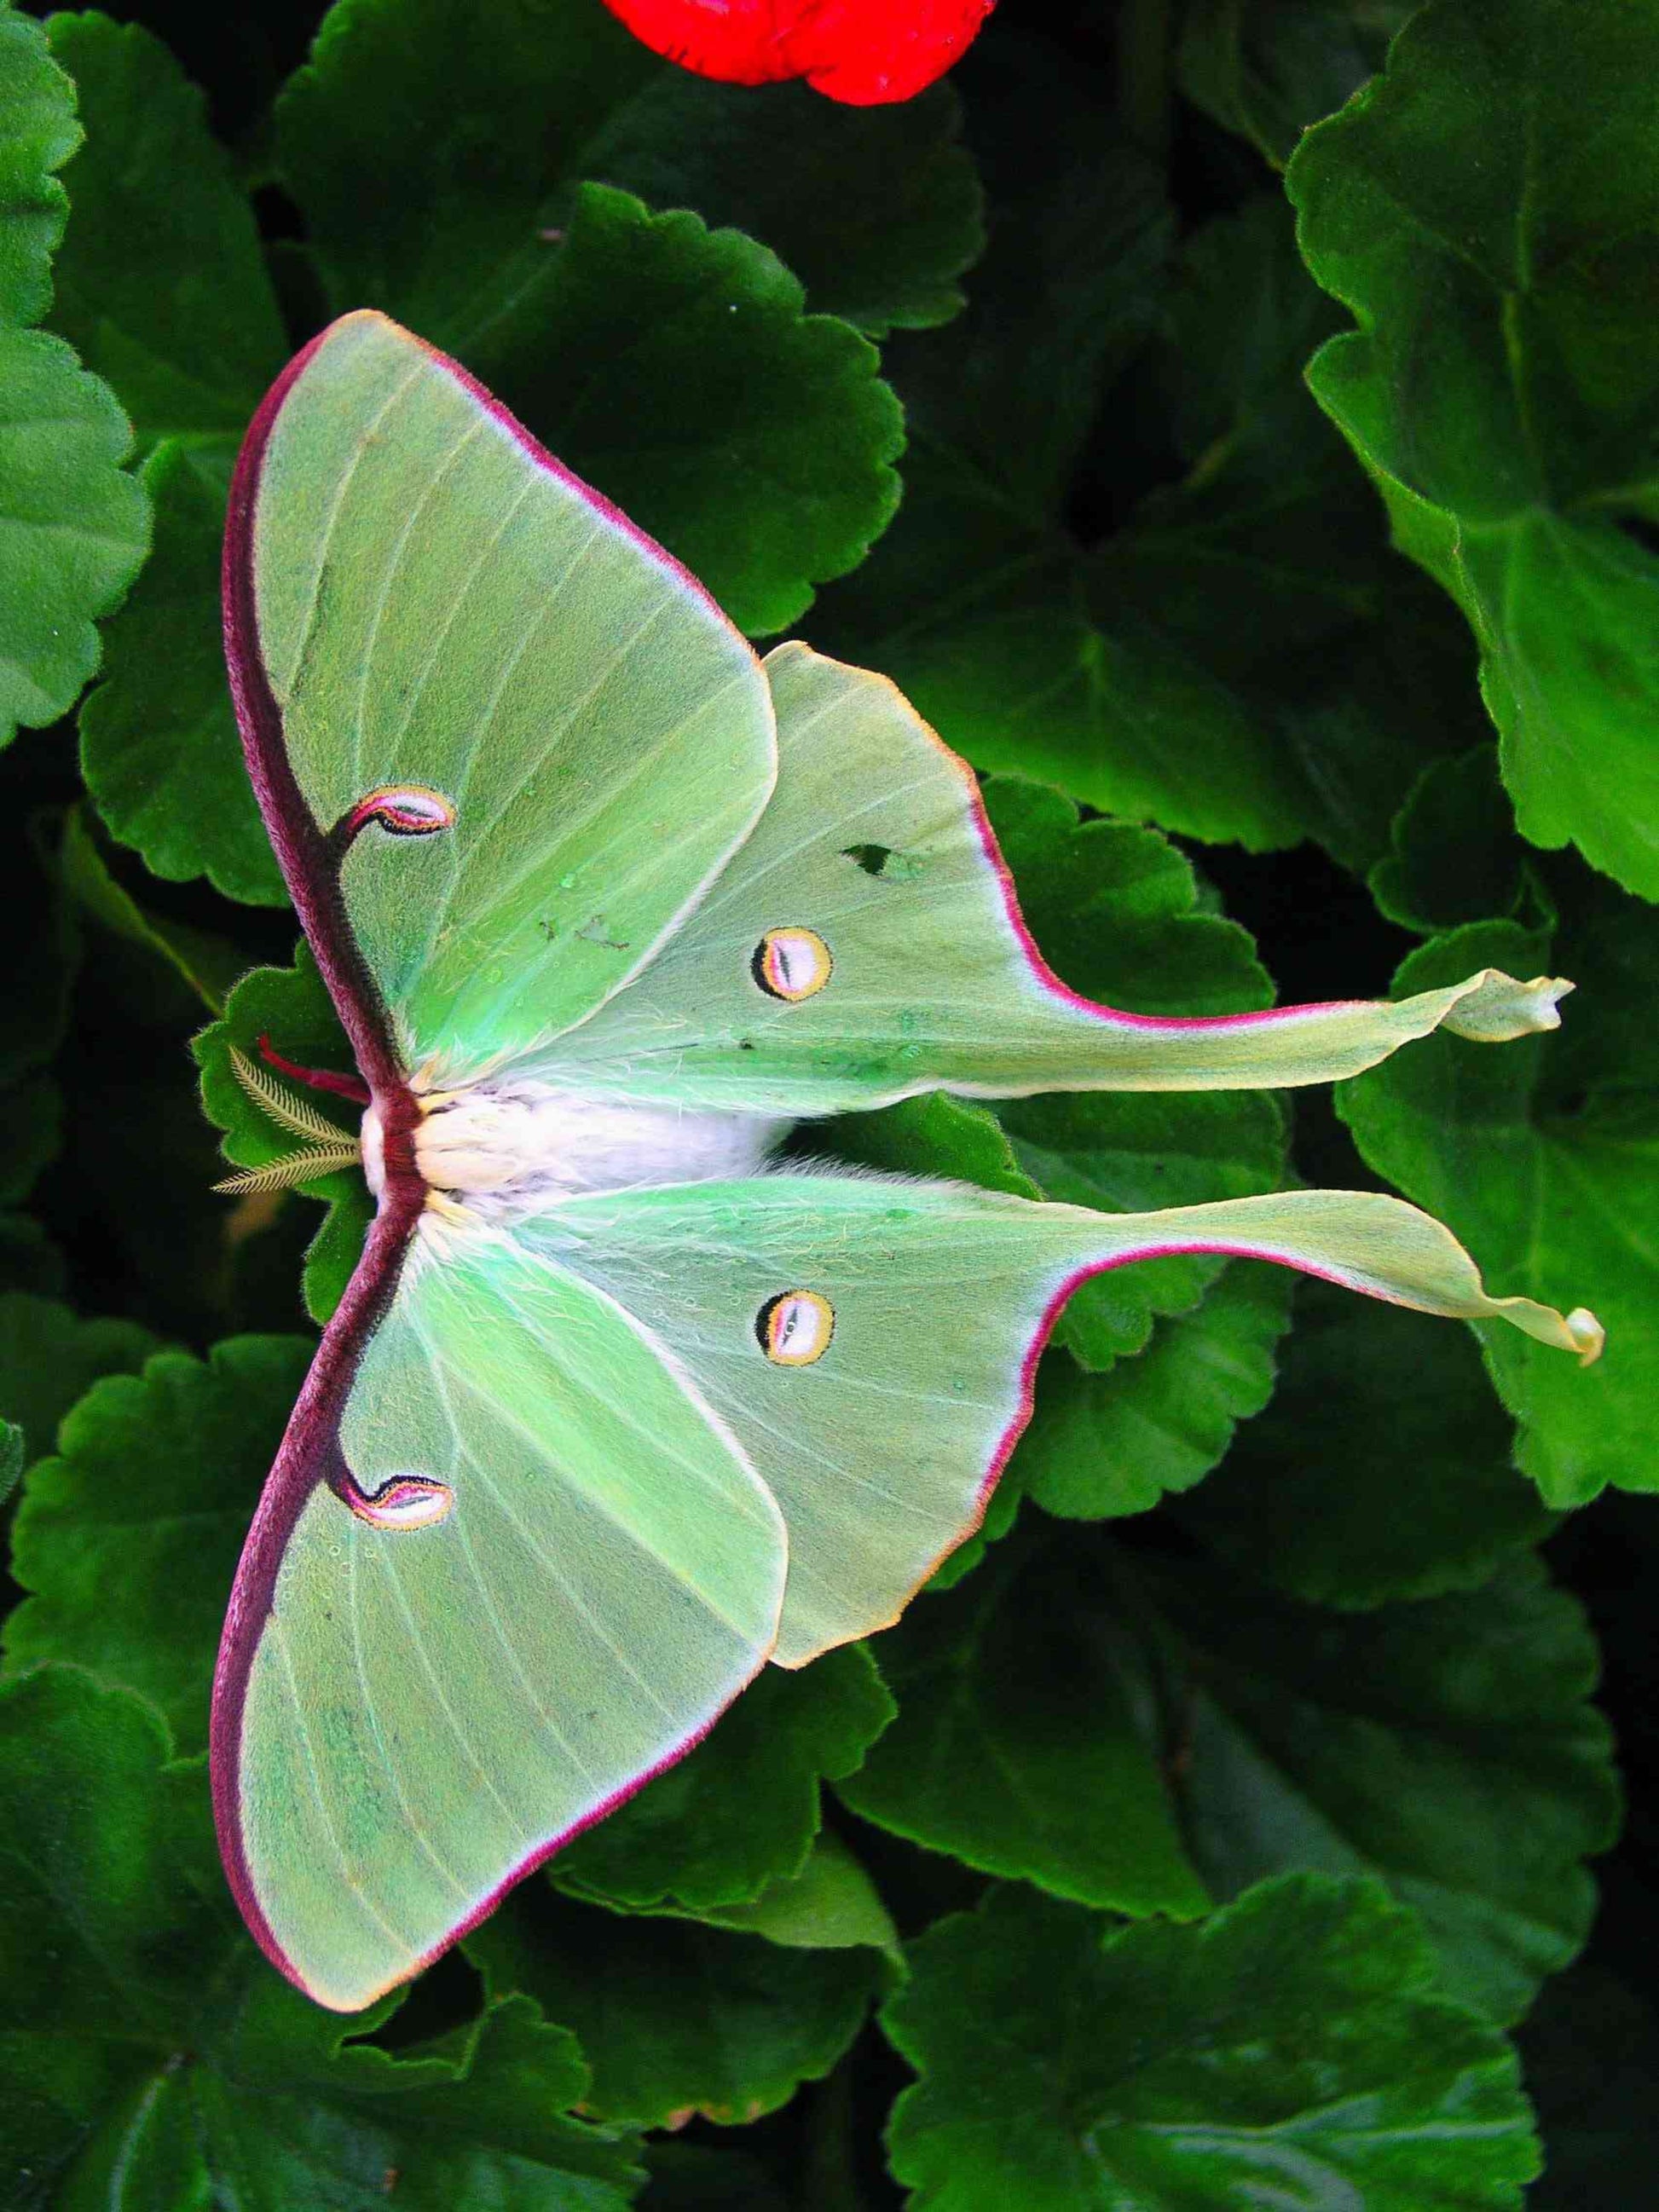 luna moth on hist host plant